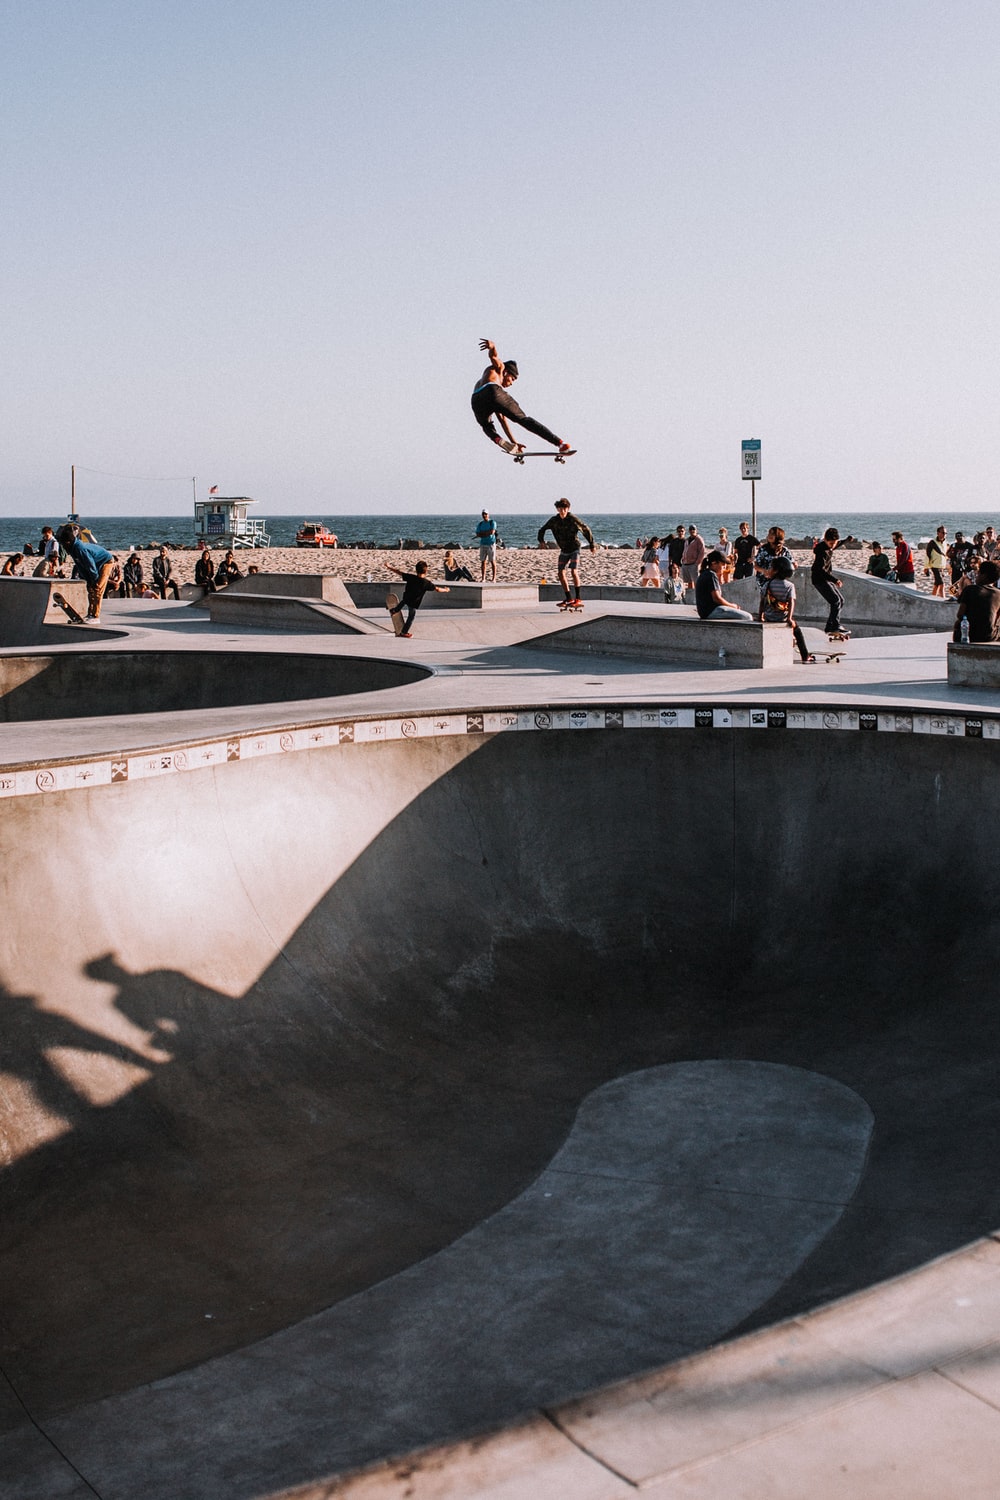 Venice Beach Skate Park Pictures Image